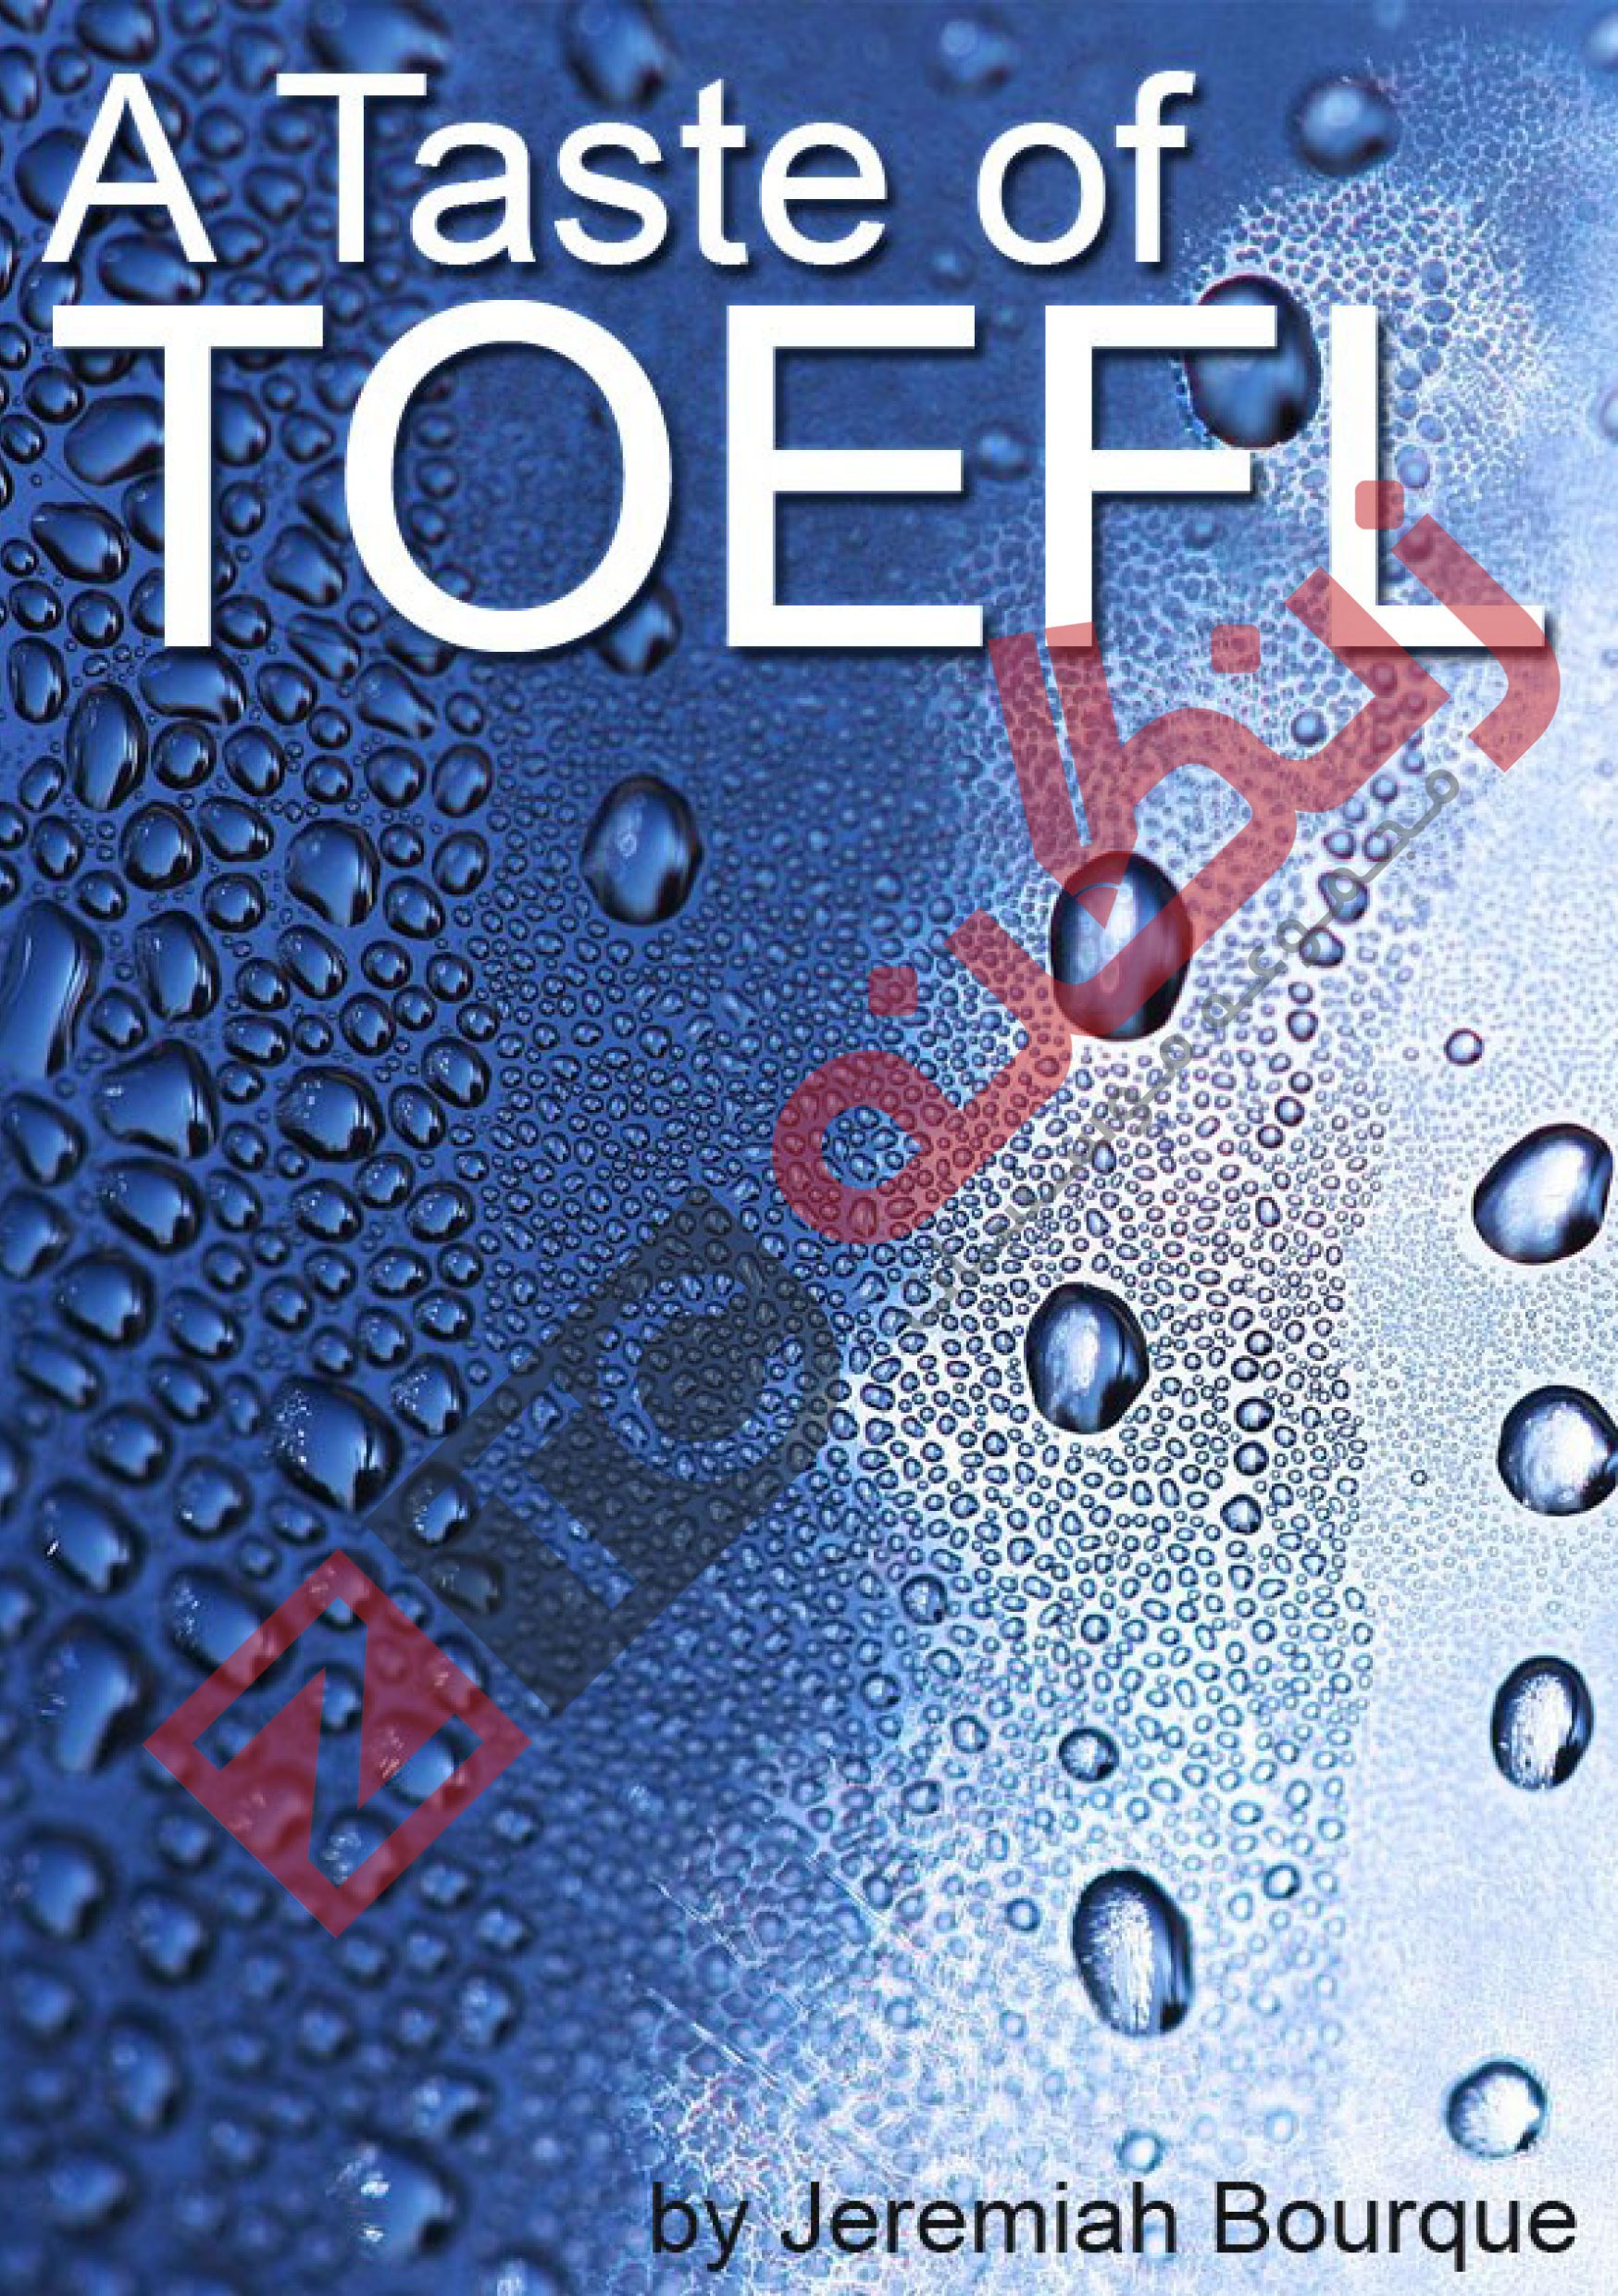 A Test of TOEFL